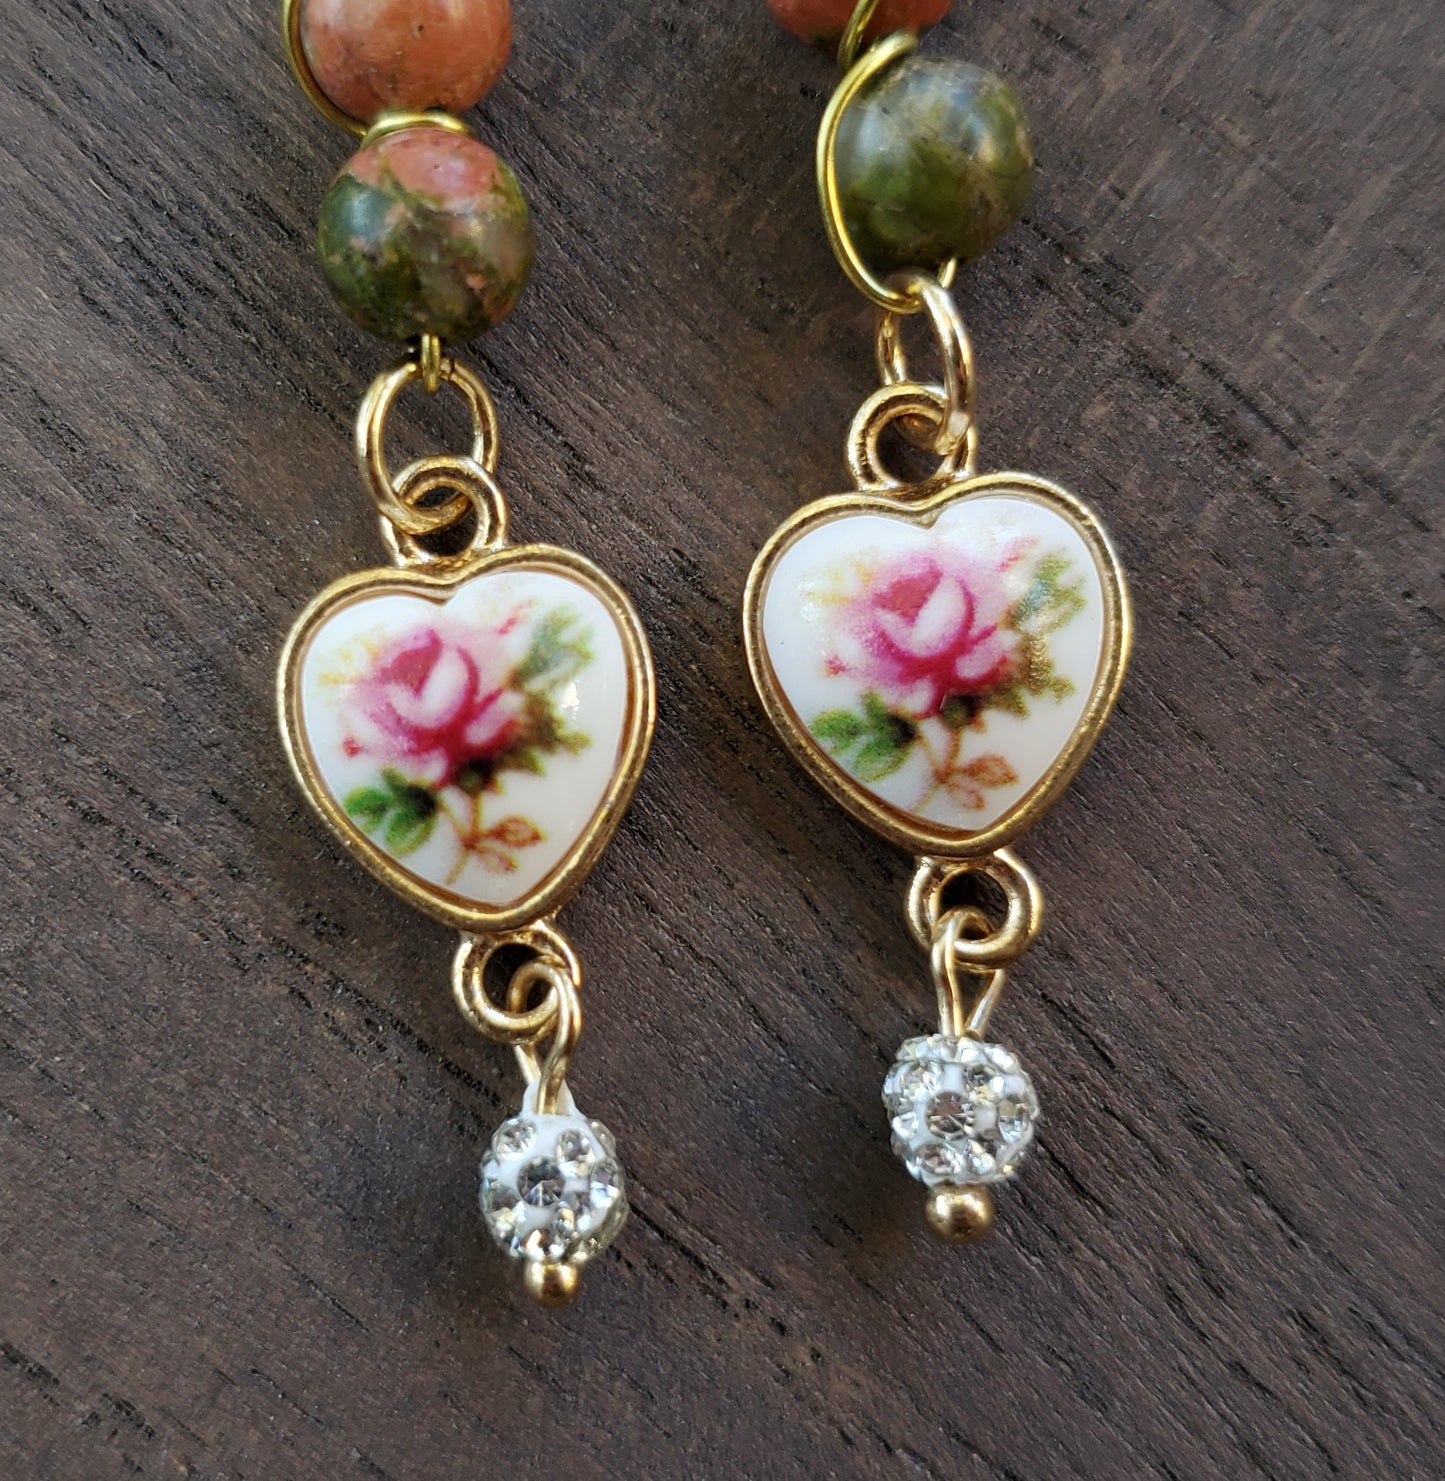 Vintage-Style Flower Heart Earrings with Unakite